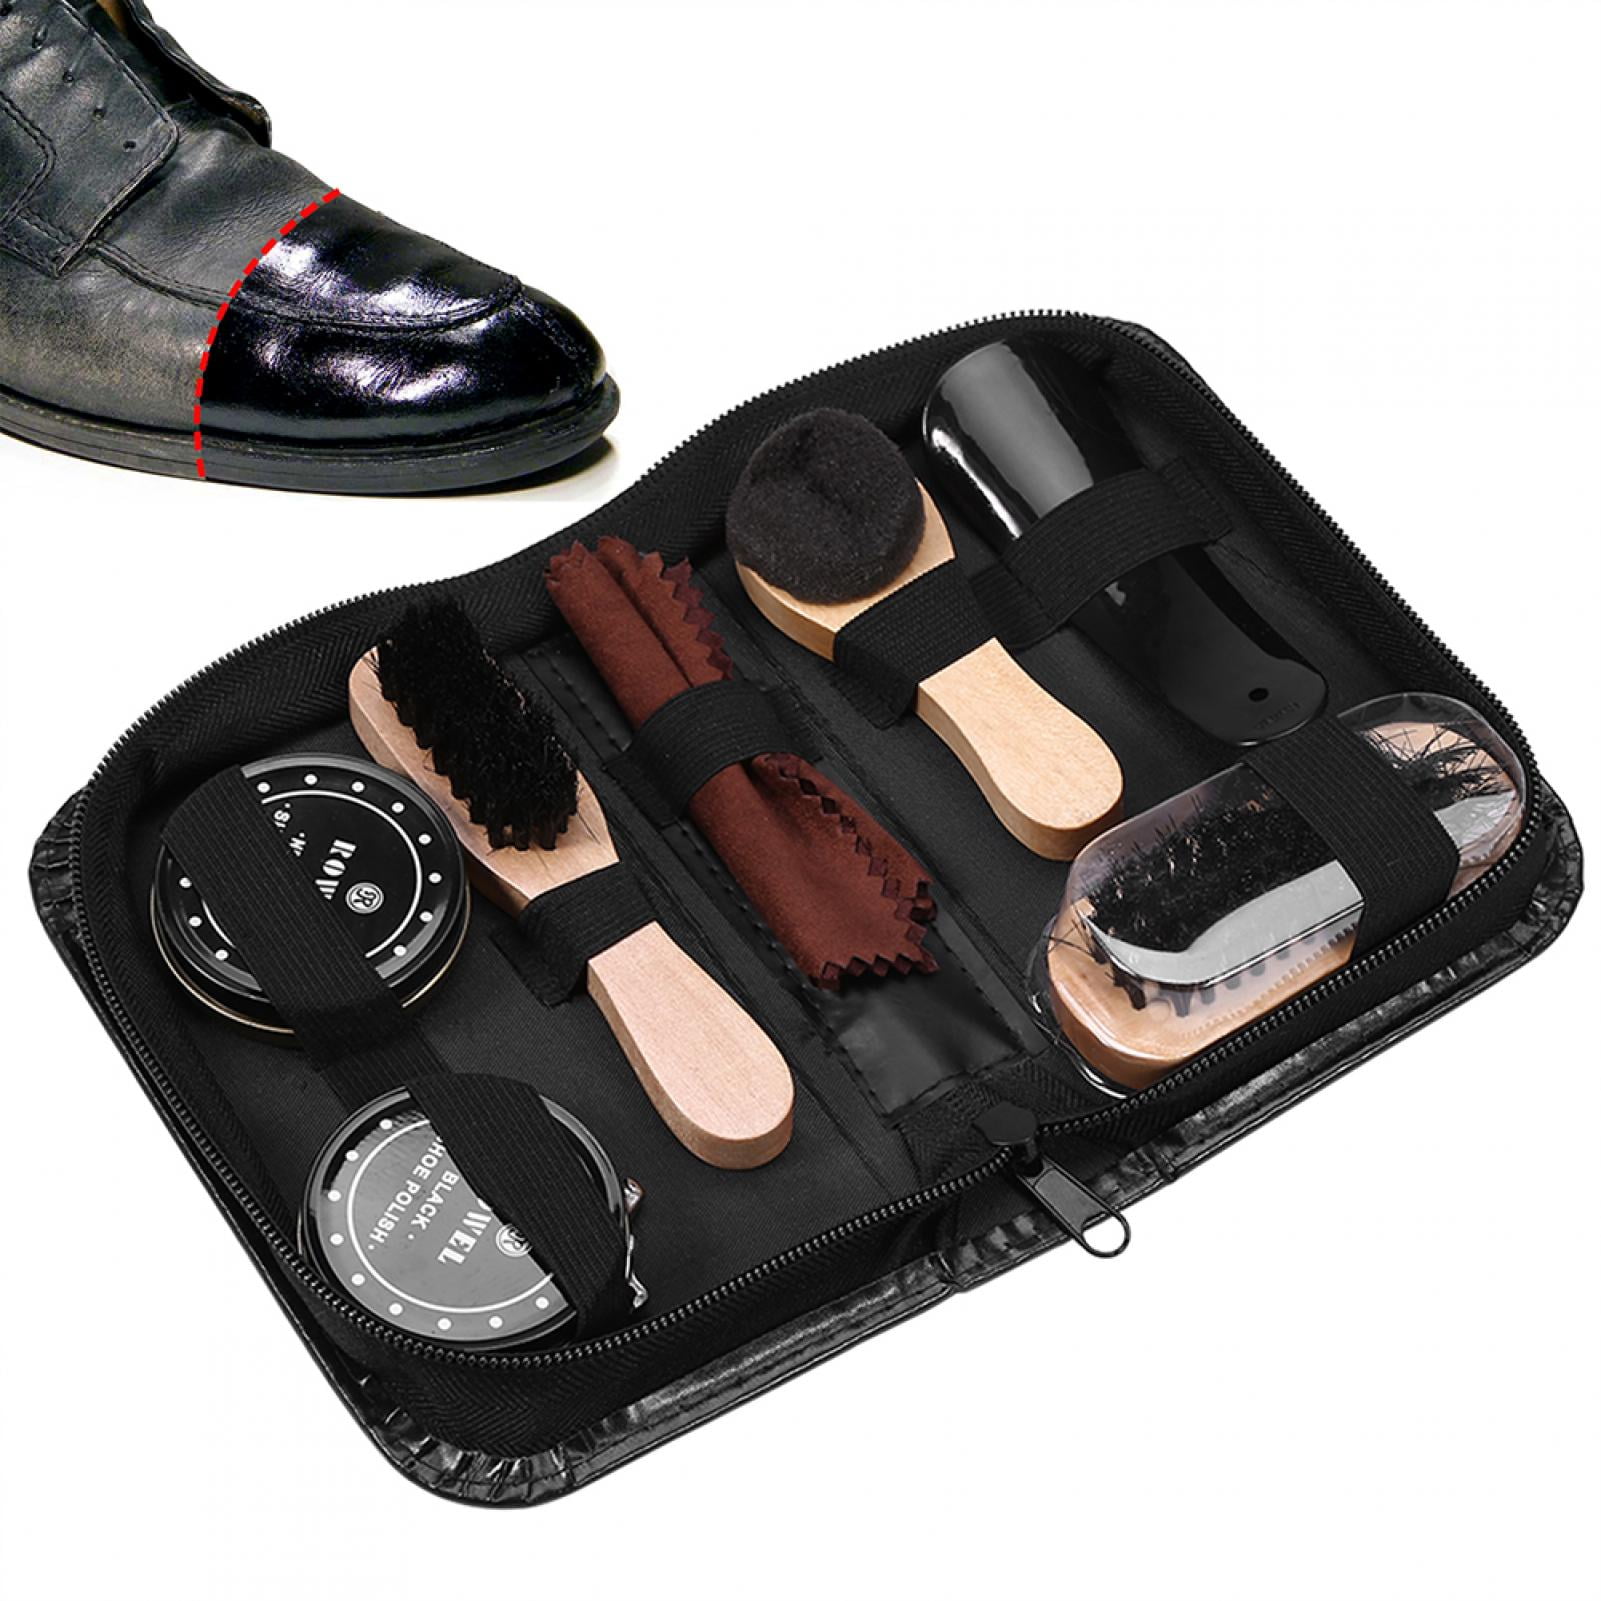 FOOTMATTERS Hardwood Boot & Shoe Care Shine Box - Shine Box Only